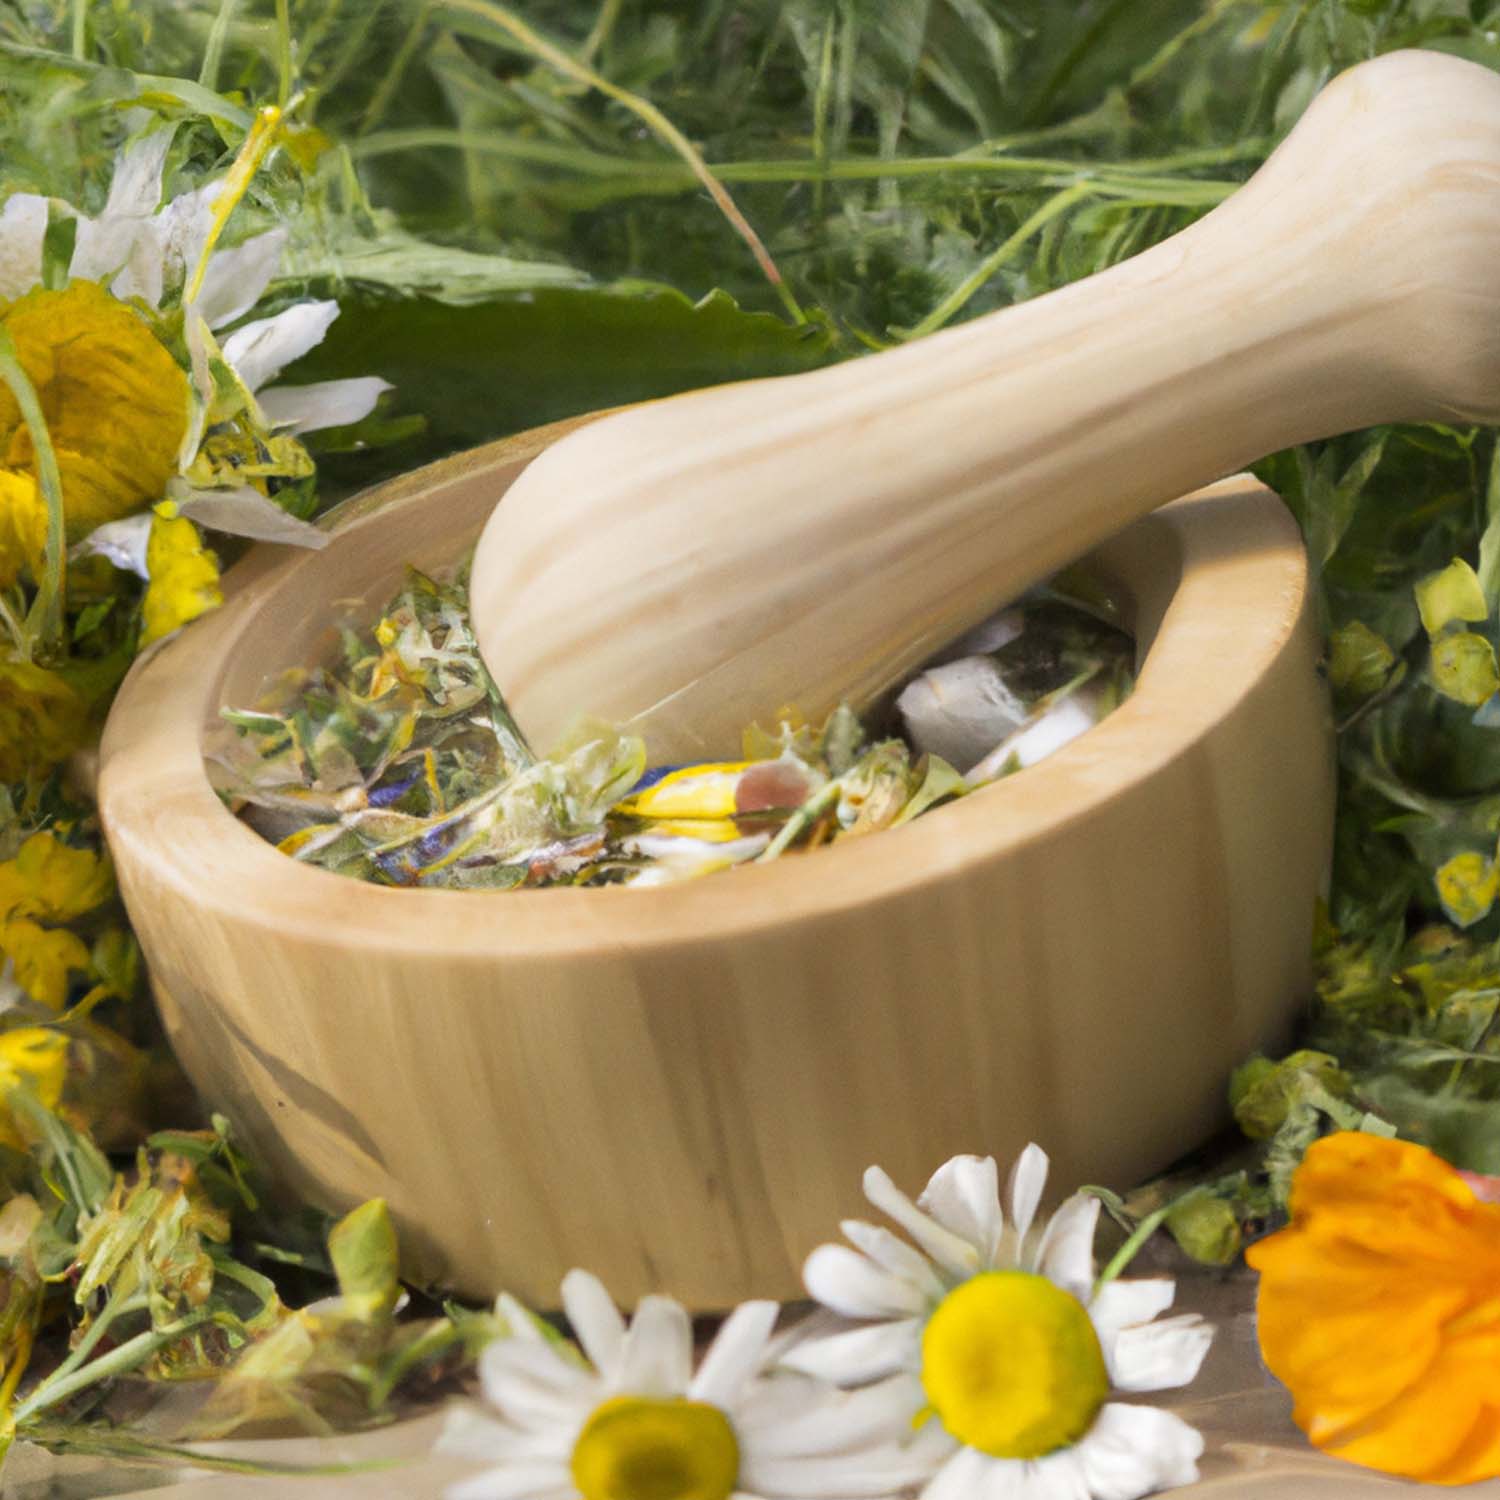 Herbal Medicine and Wellness